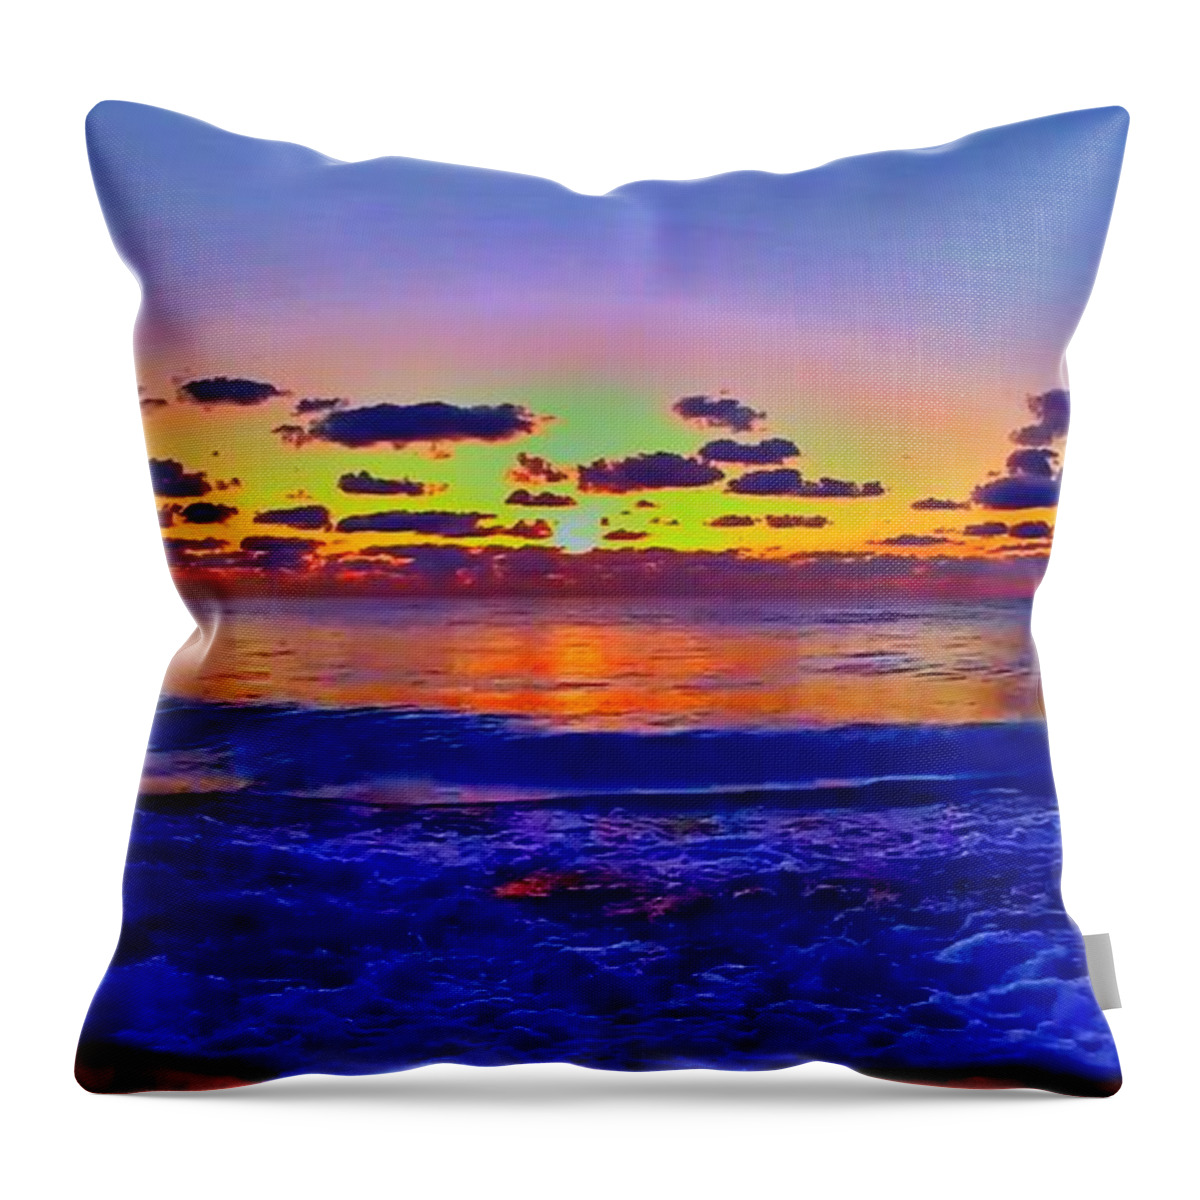 Sunrise Throw Pillow featuring the photograph Sunrise Beach 8 by Rip Read